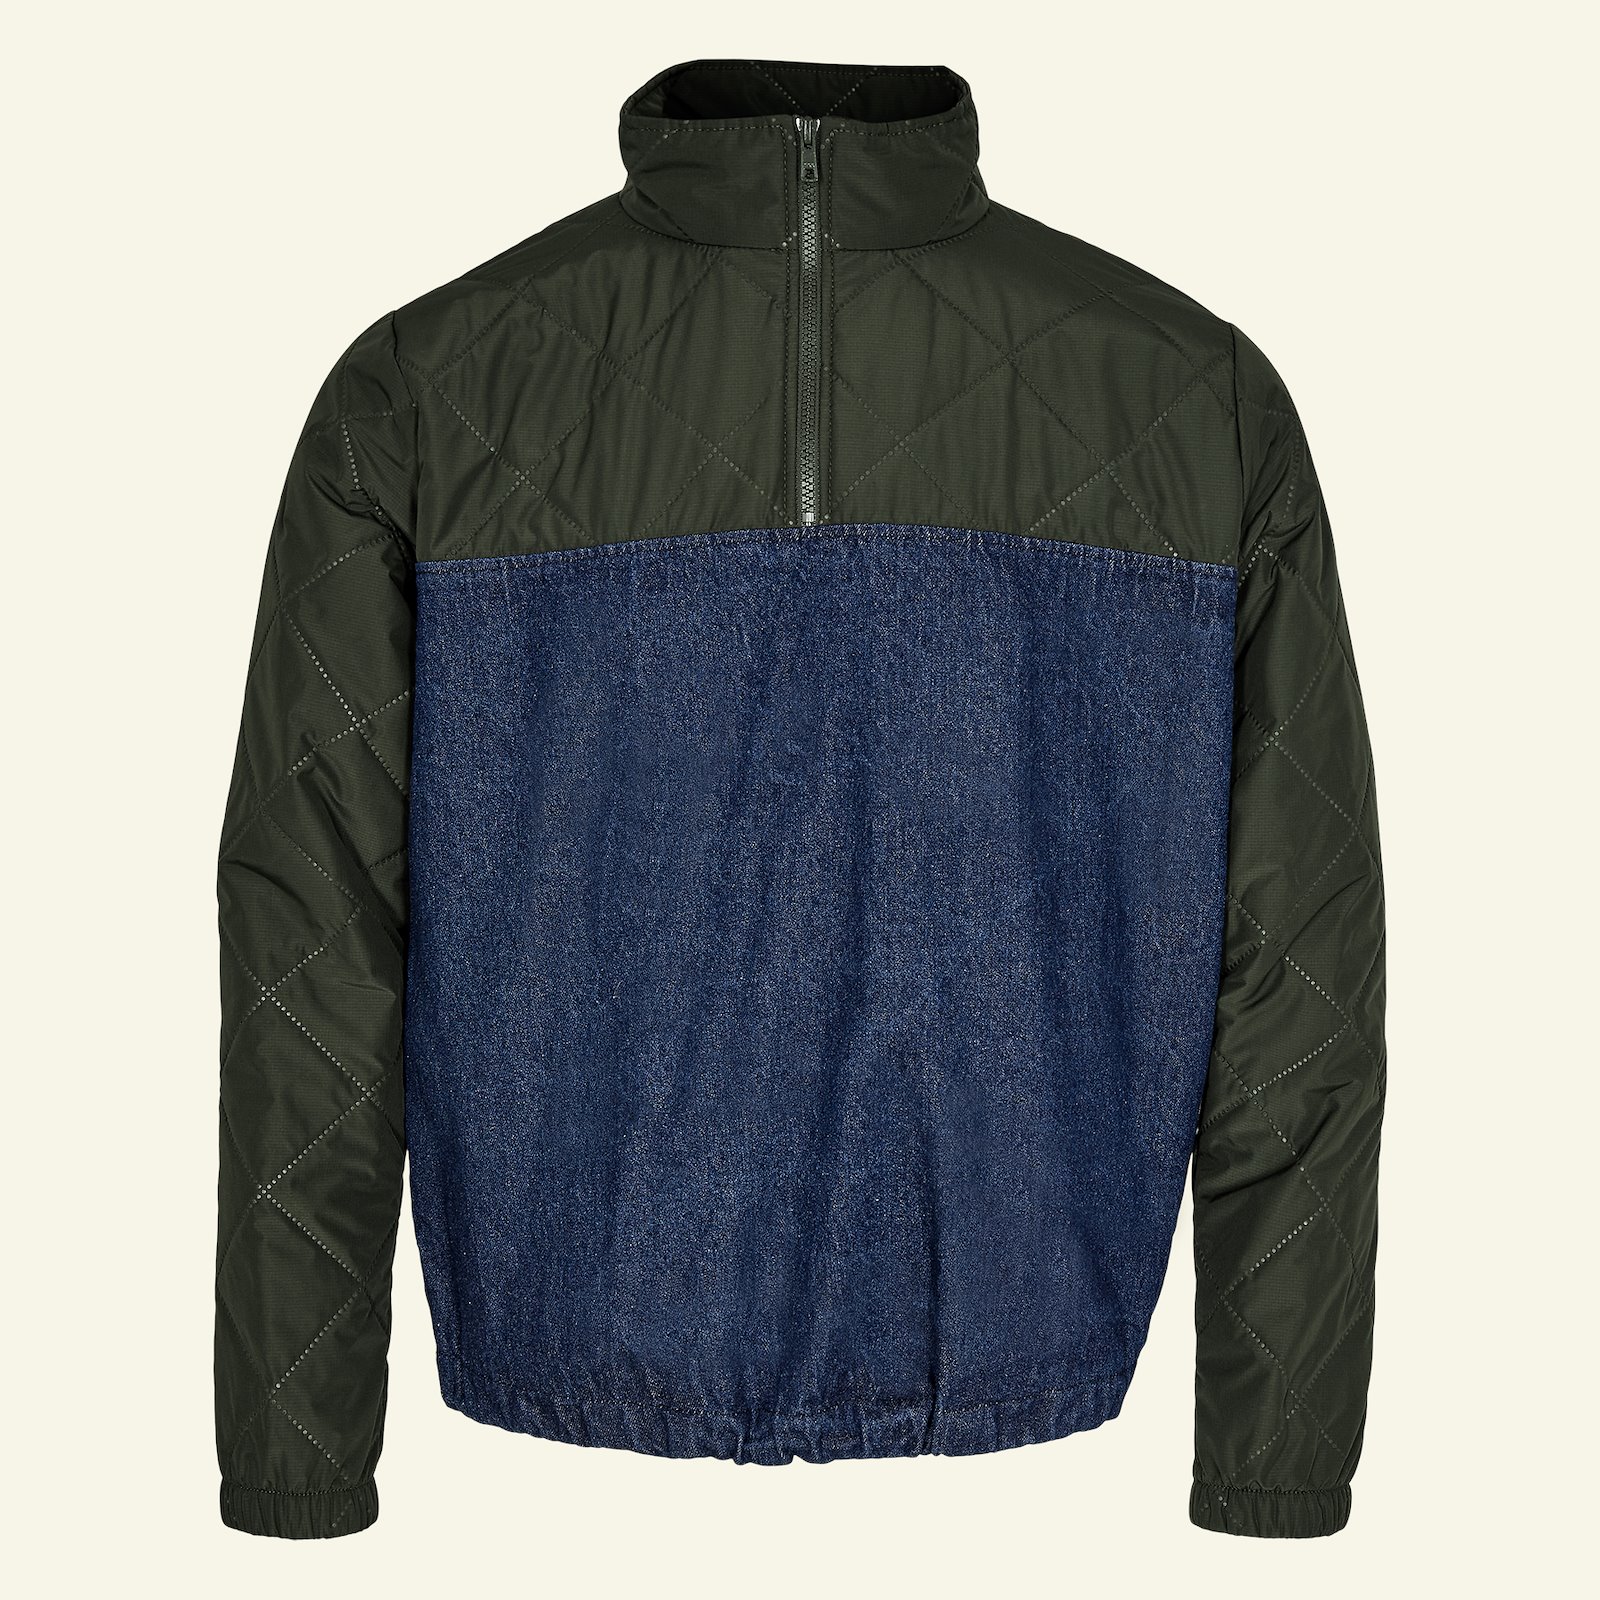 Sweatshirt and jacket, L p87004_920264_400023_sskit